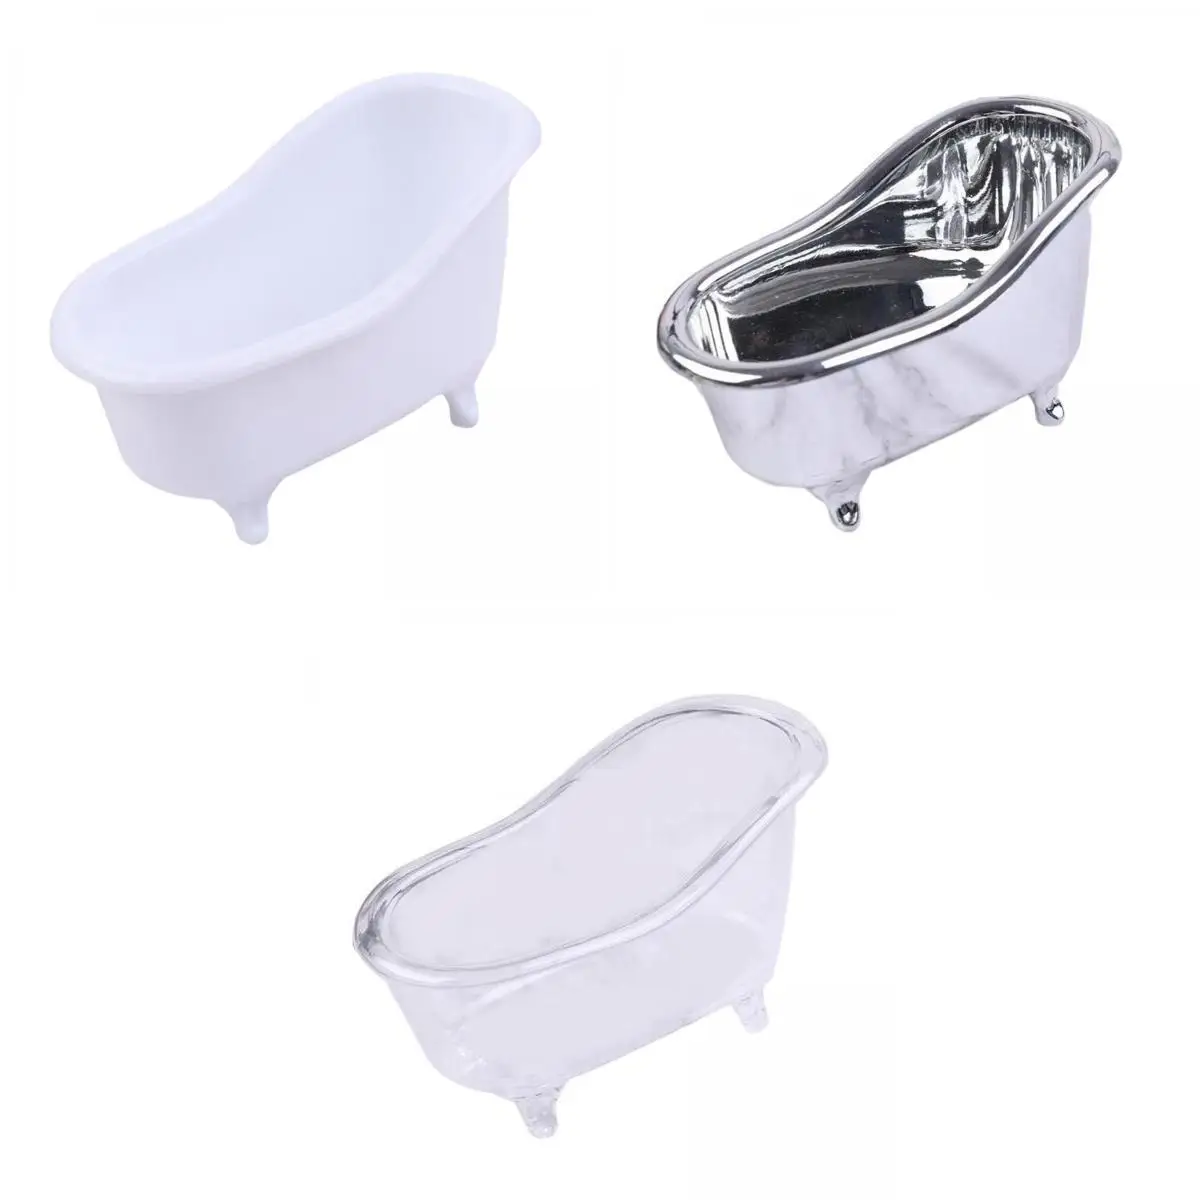 3Pcs Bathtub Soap Dish Holder Decorative Cosmetic Container for Home Decor Counter Bathroom Accessories